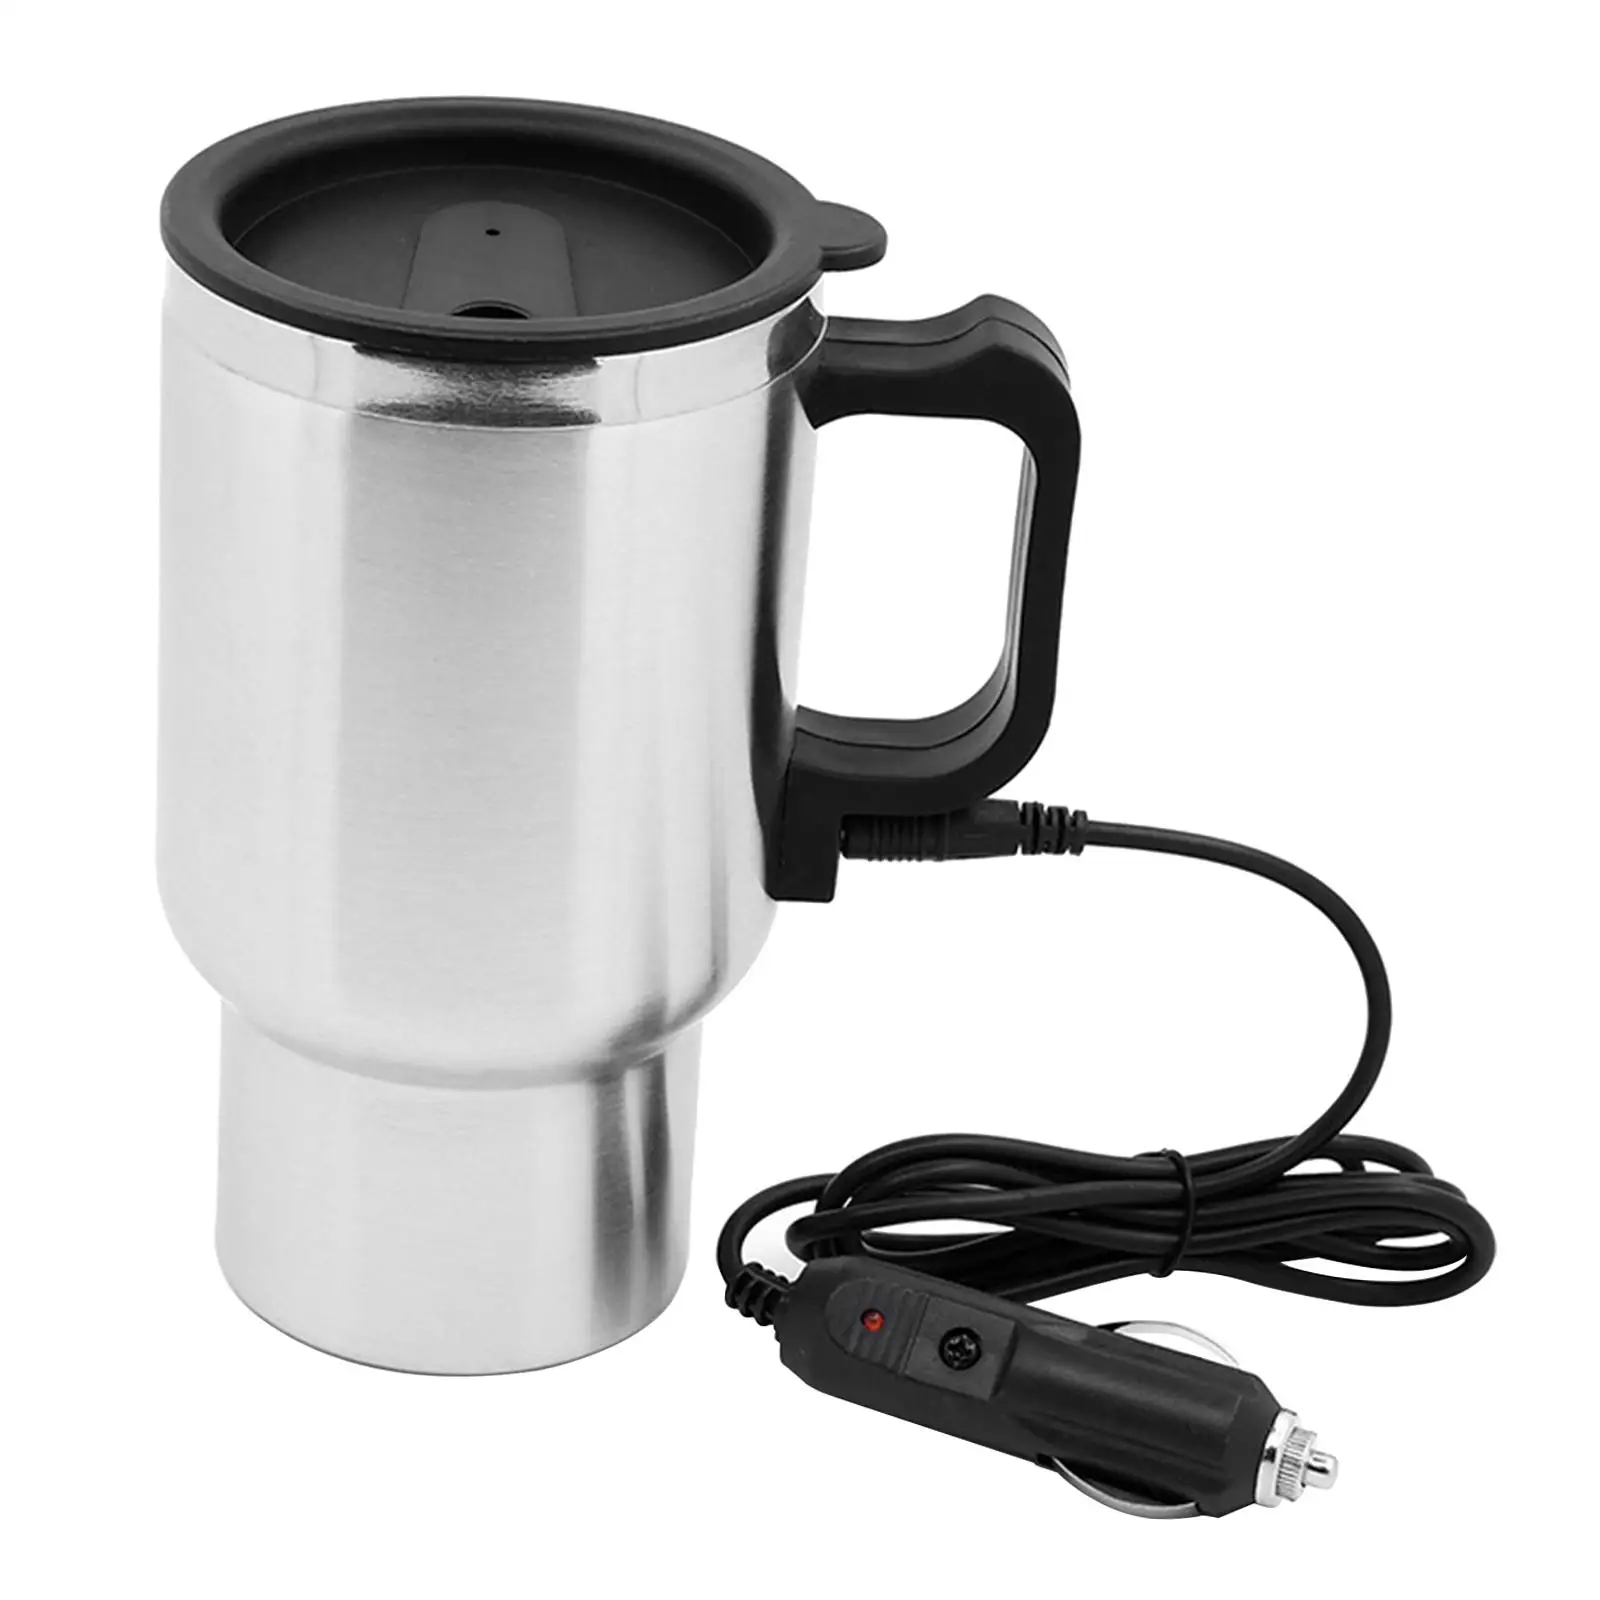 Car Heating Cup Heated Mug for Cars Trucks Heating Water Milk